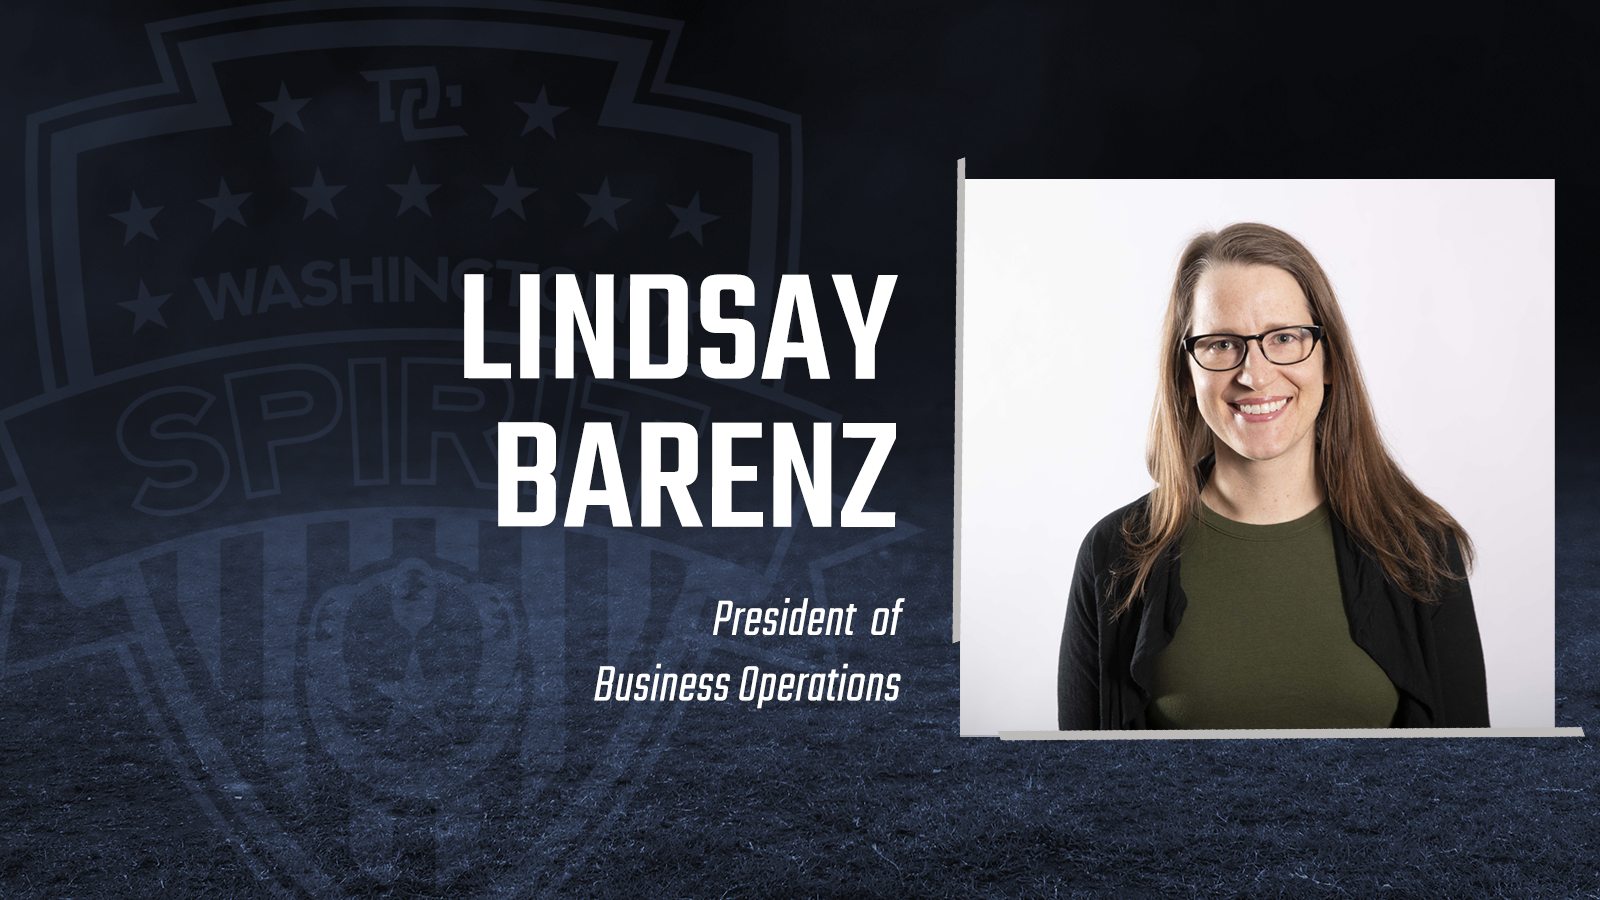 Washington Spirit Nombra a Lindsay Barenz como Presidenta de Operaciones Comerciales Featured Image